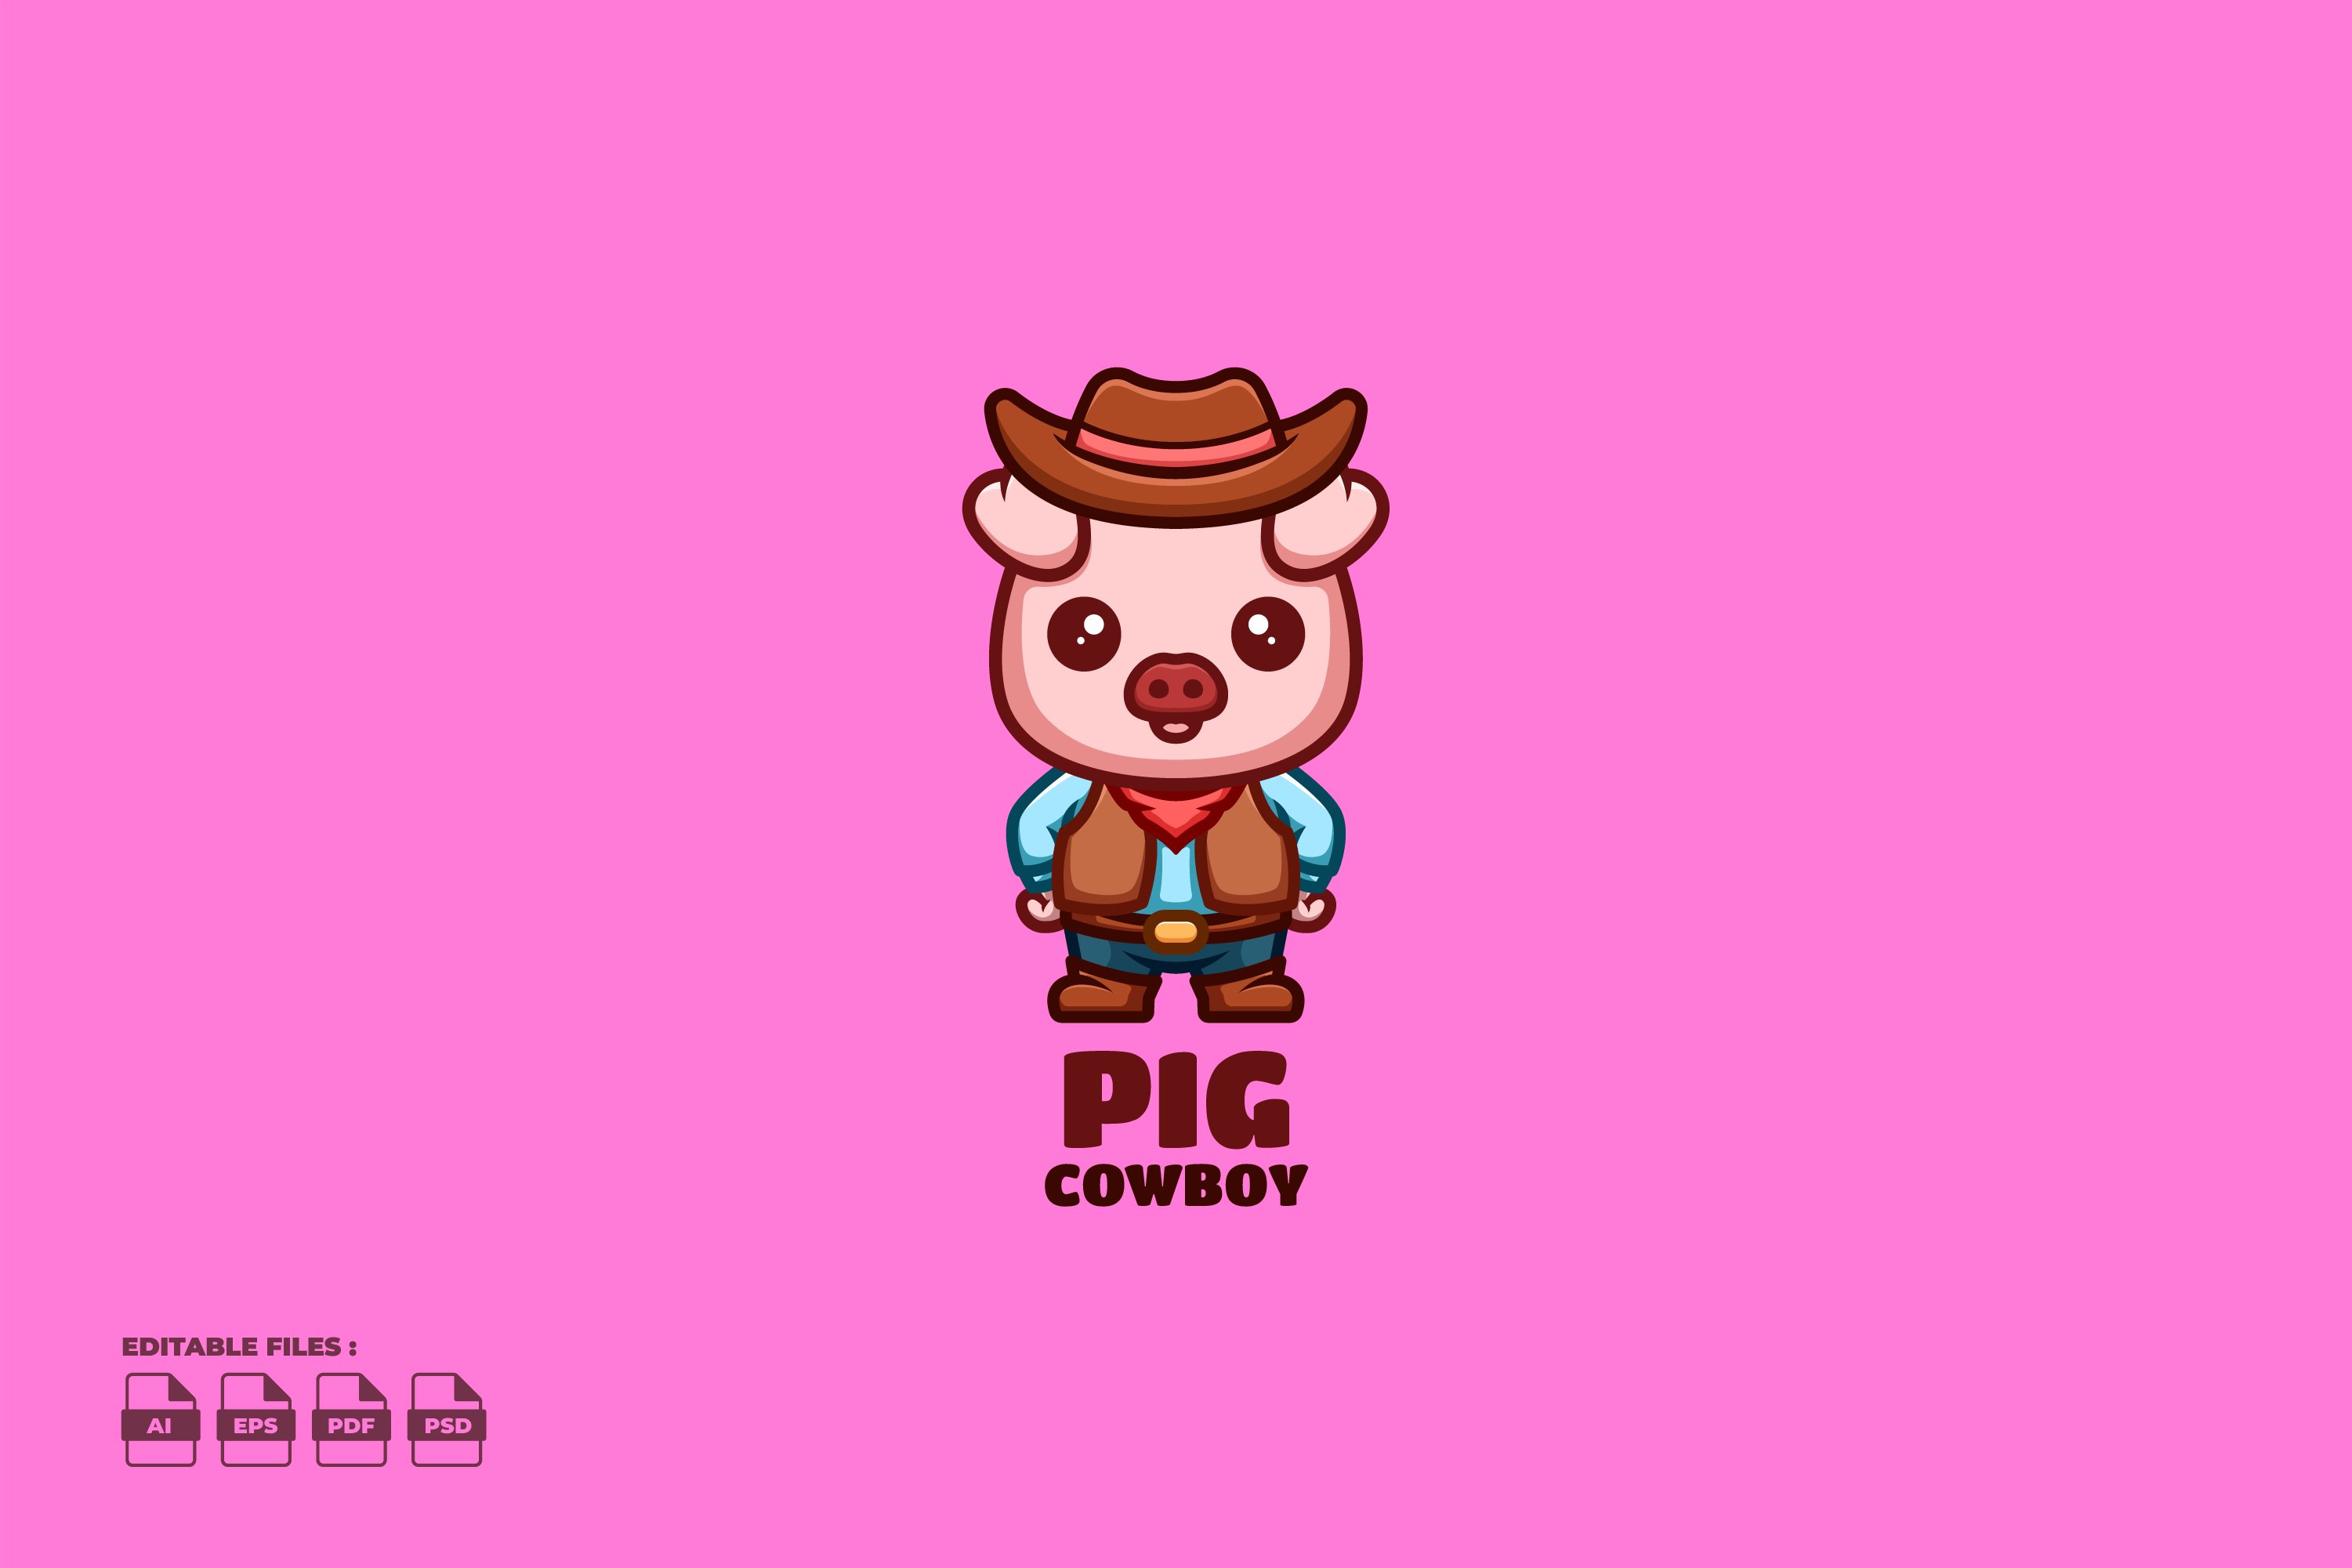 Cowboy Pig Cute Mascot Logo cover image.